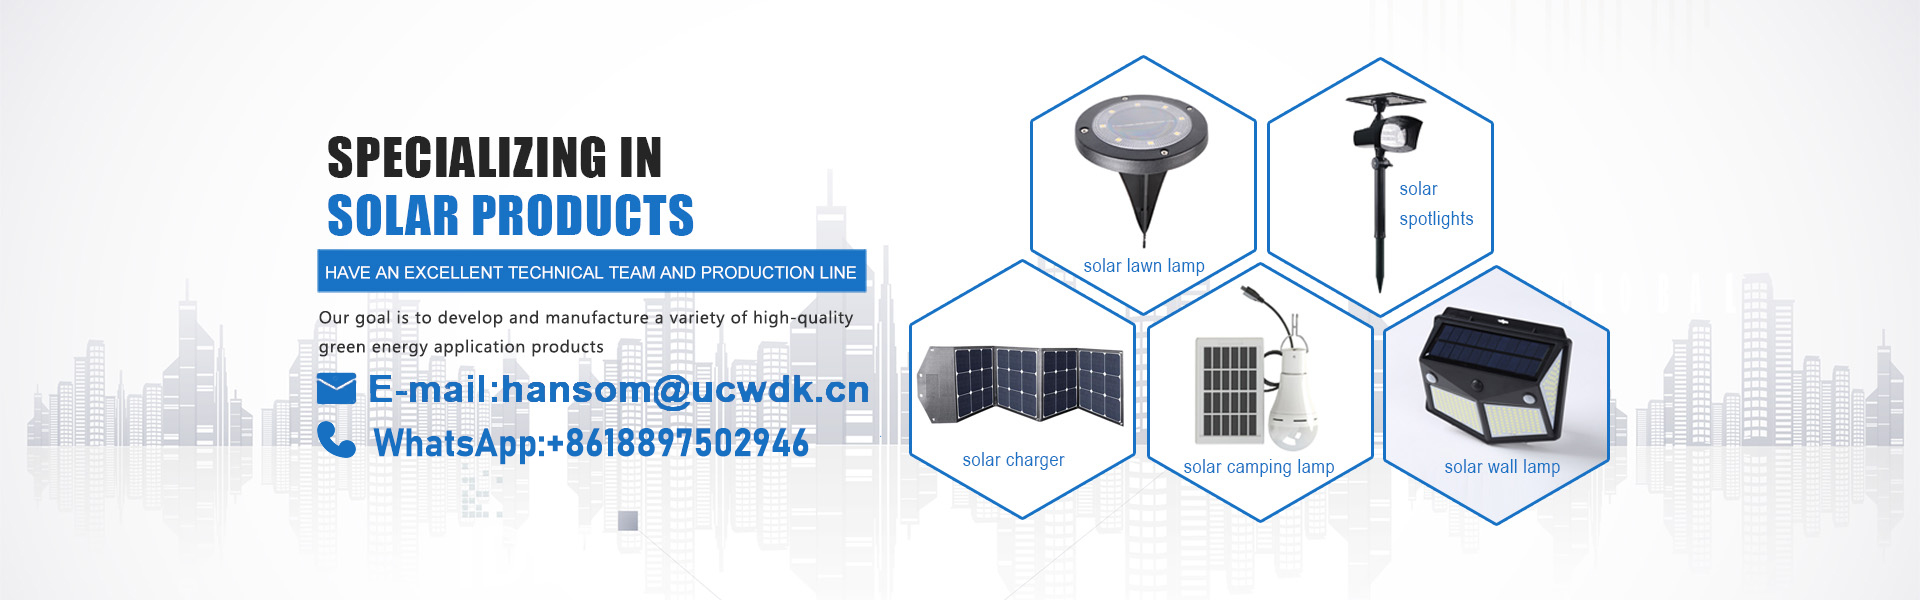 Caricabatterie solare, luce solare, pannello solare,UCWDK Solar Technology Co. Ltd.